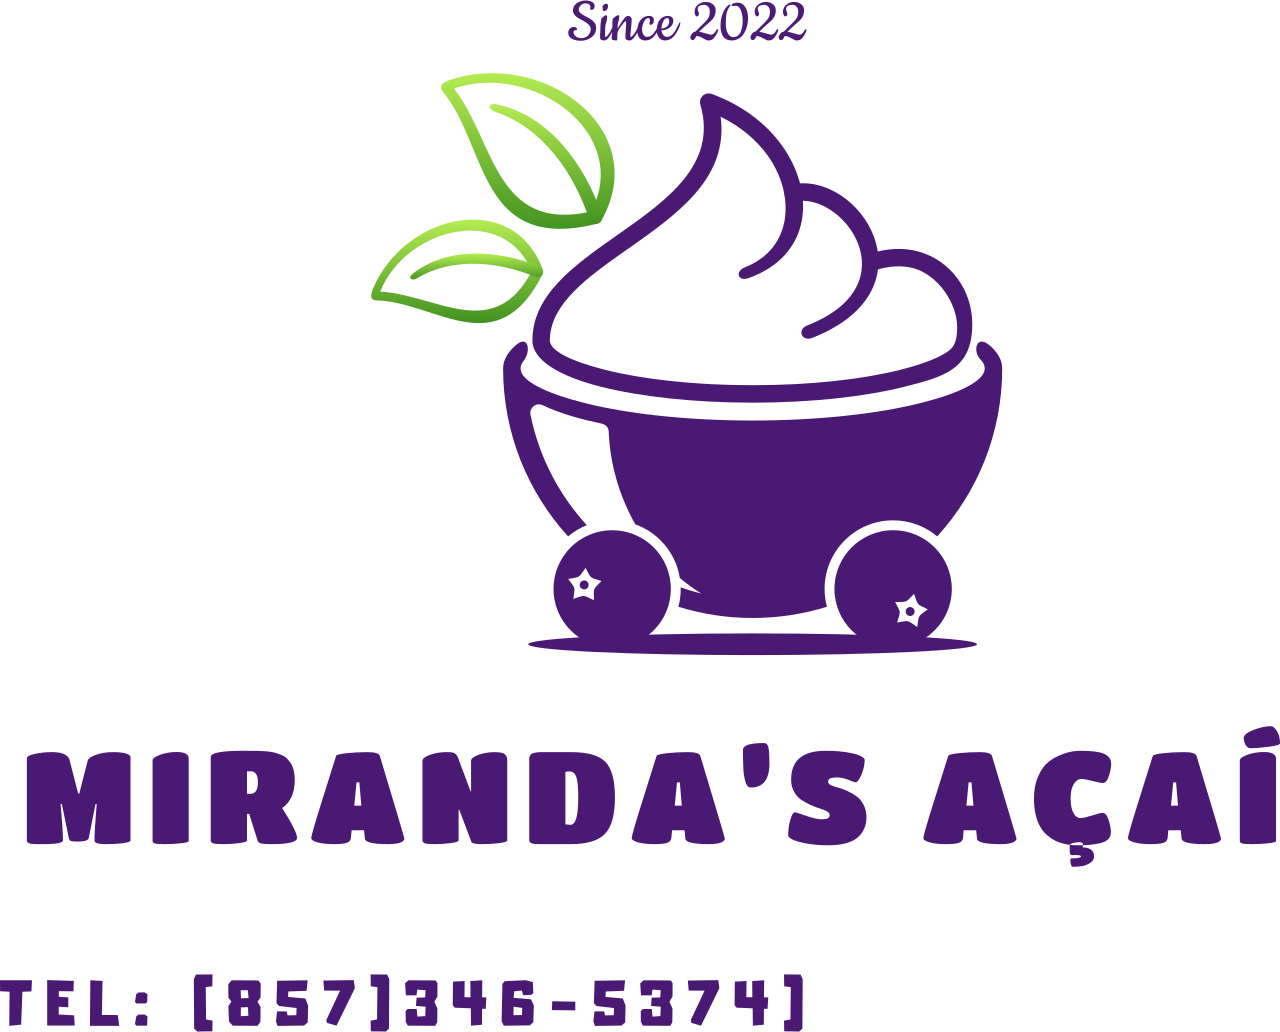 Miranda’s Açaí 's logo